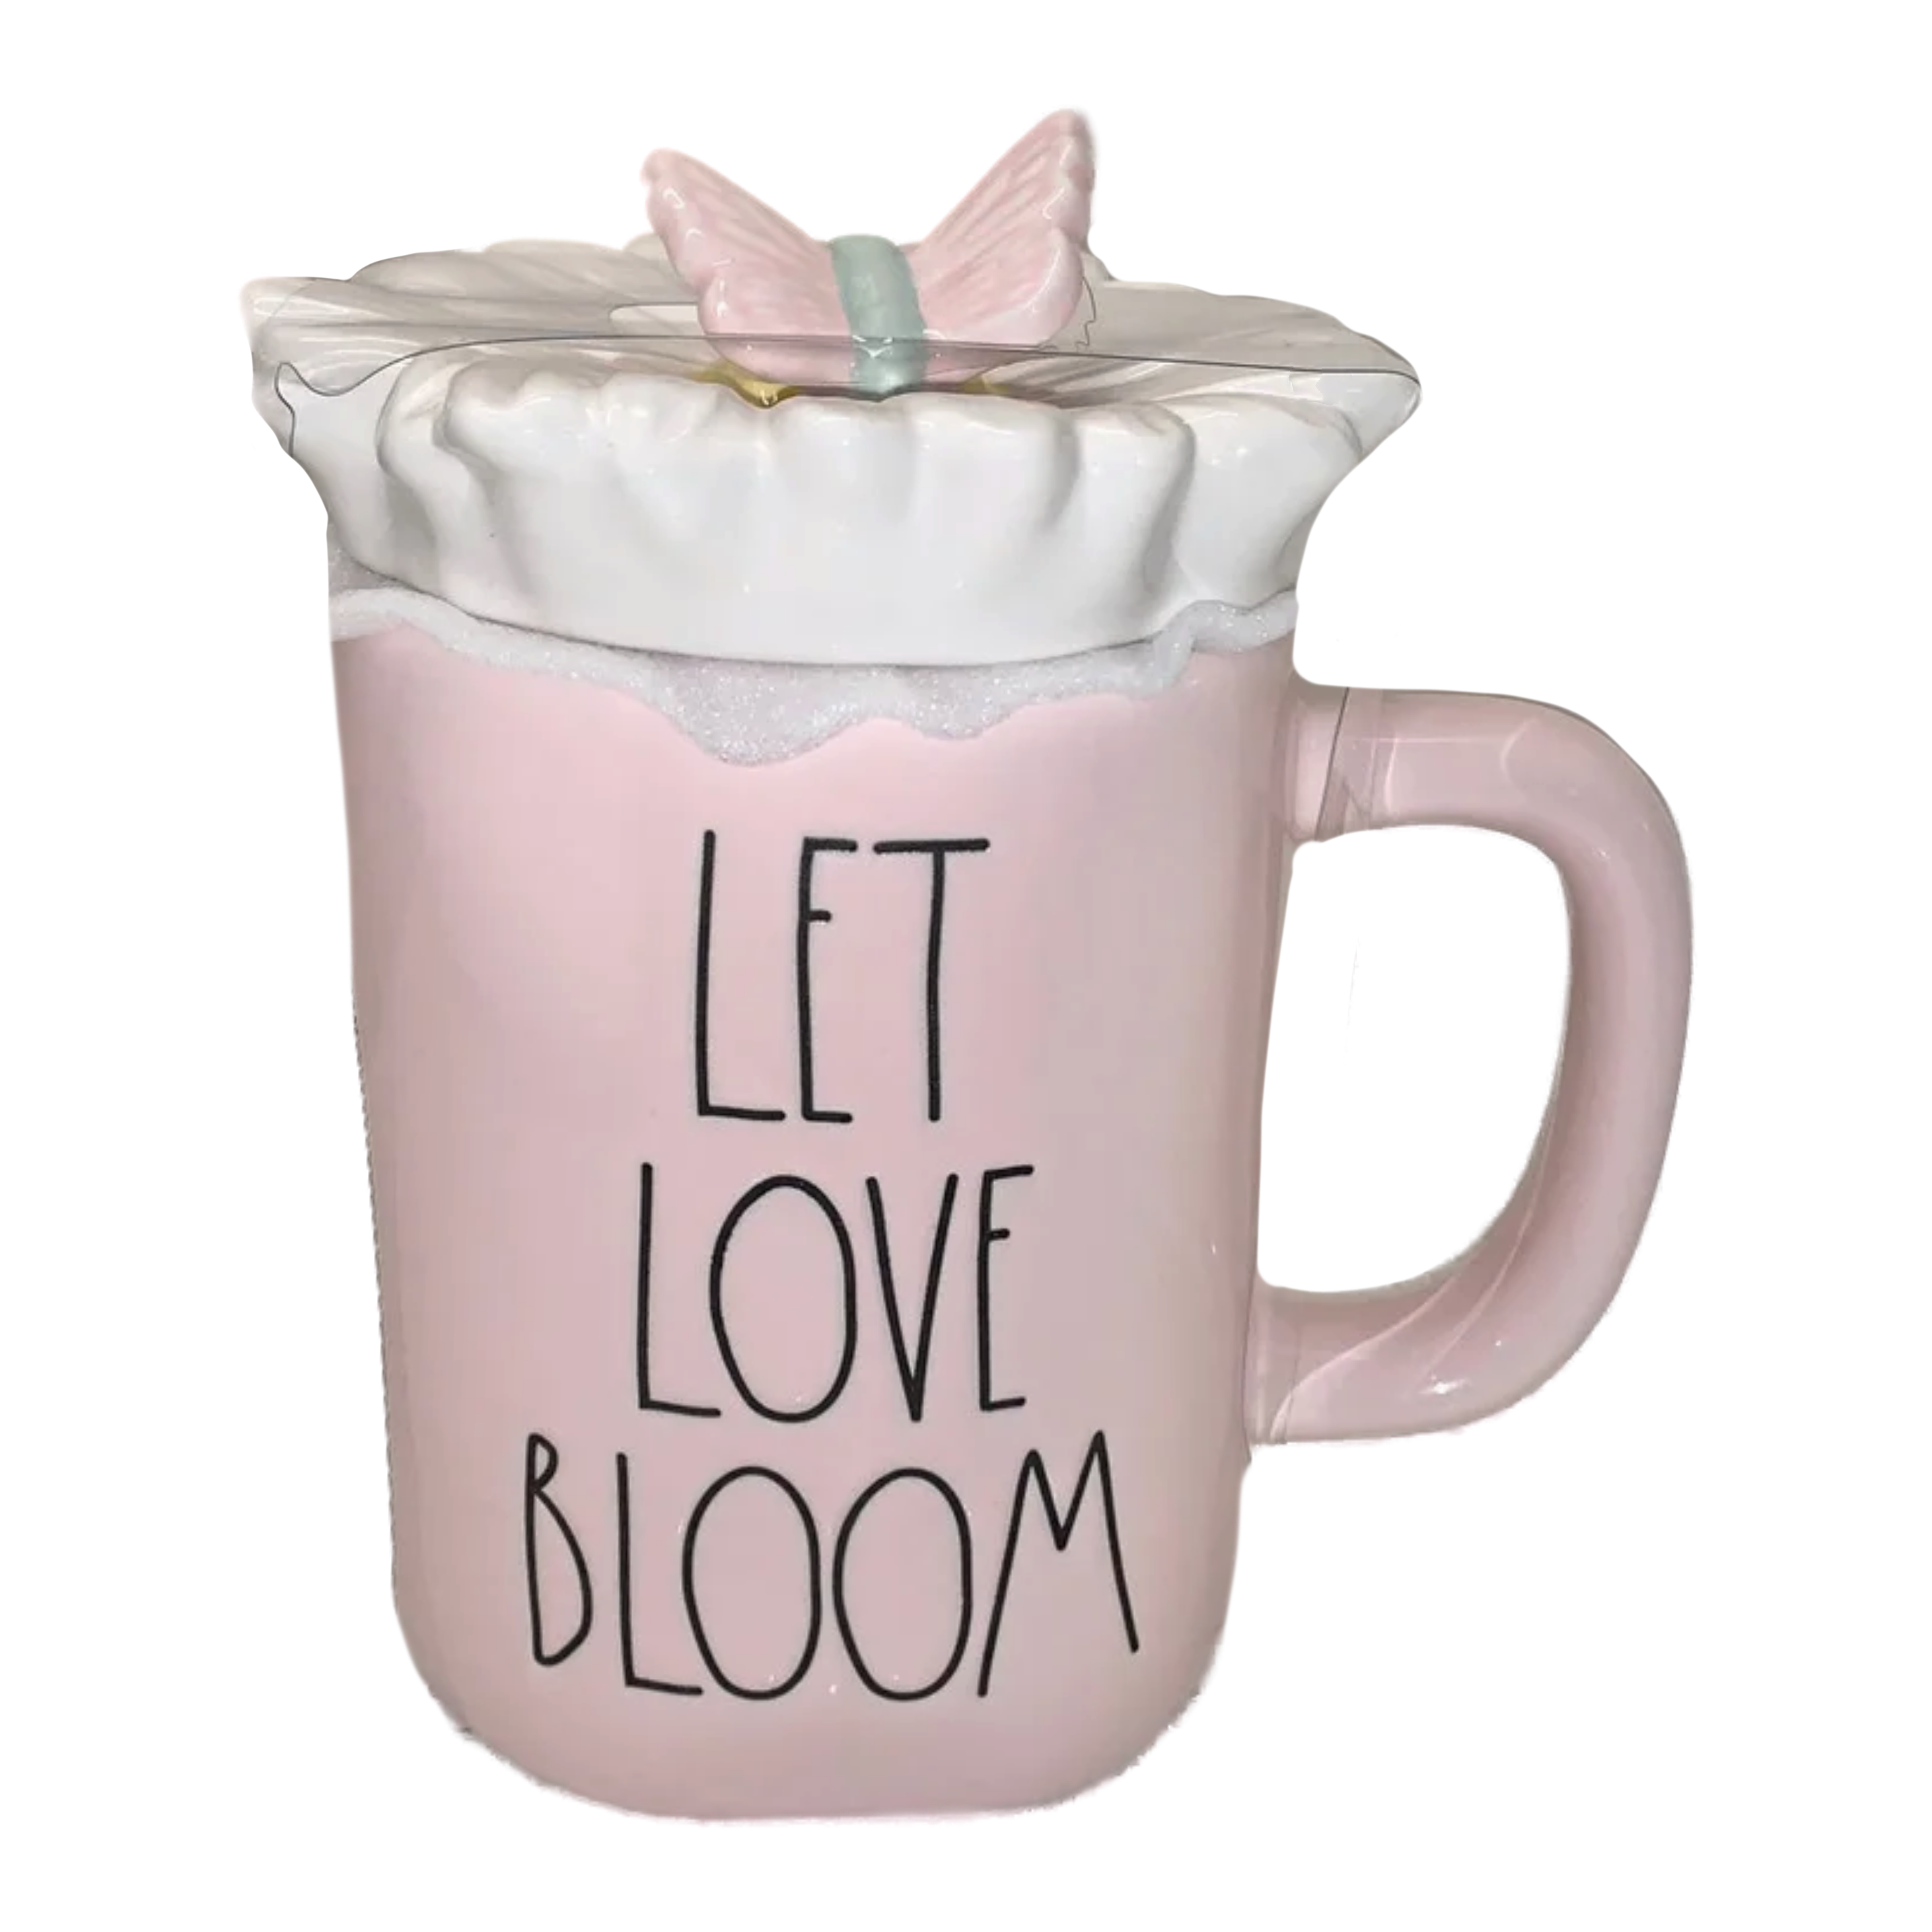 Bloom Cup